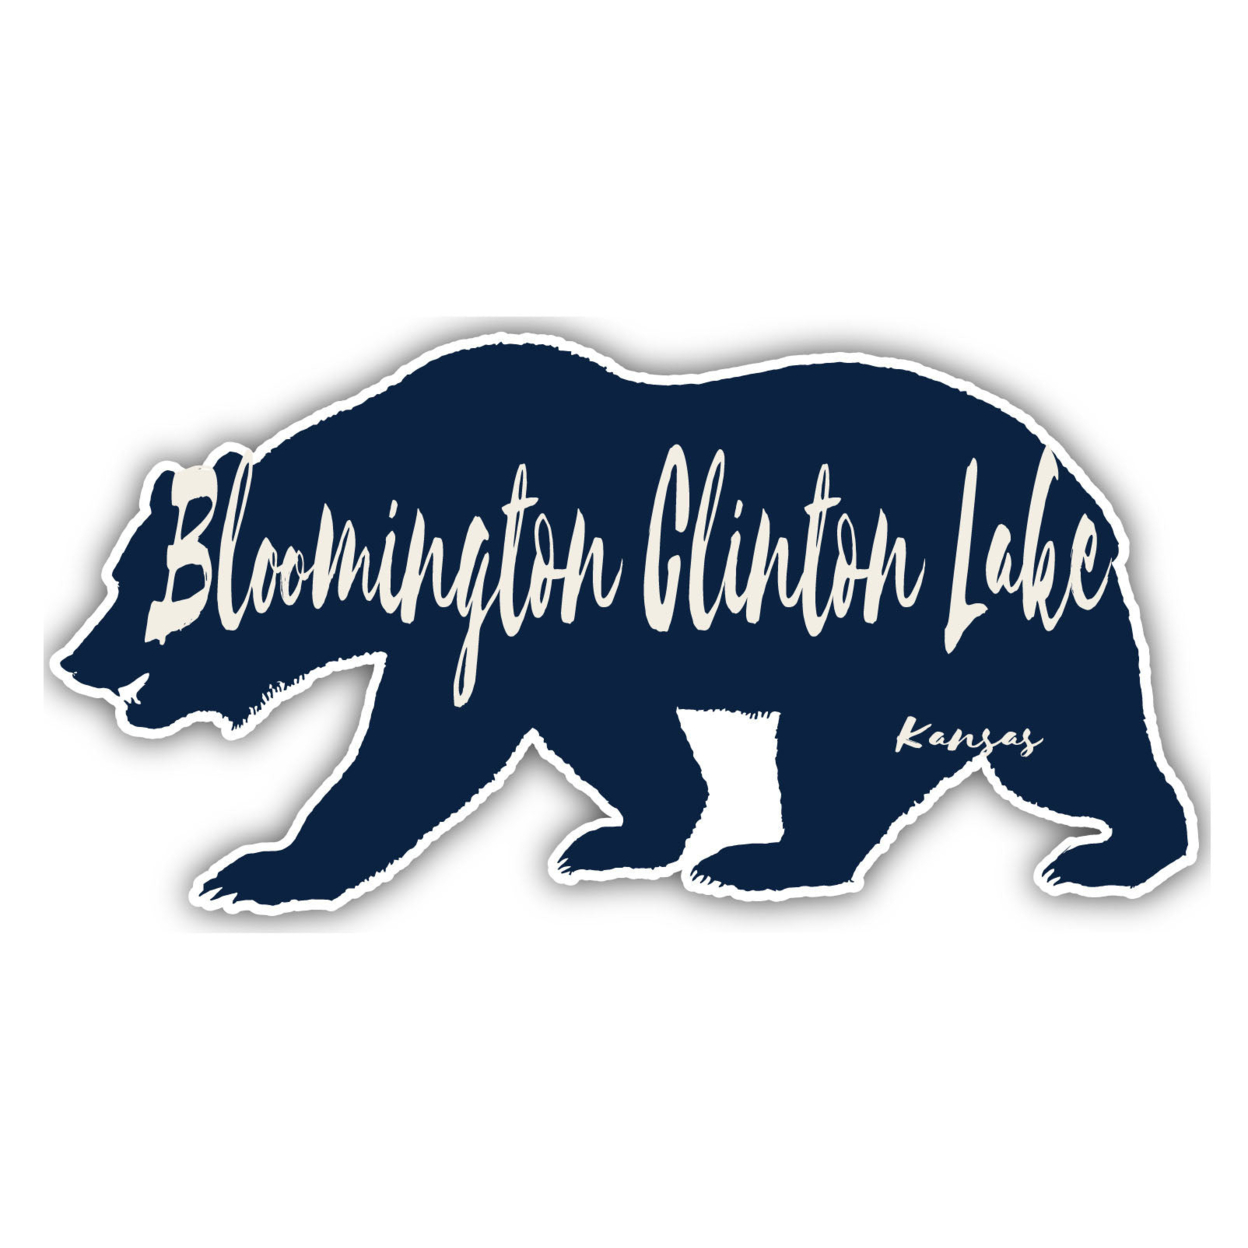 Bloomington Clinton Lake Kansas Souvenir Decorative Stickers (Choose Theme And Size) - Single Unit, 8-Inch, Bear